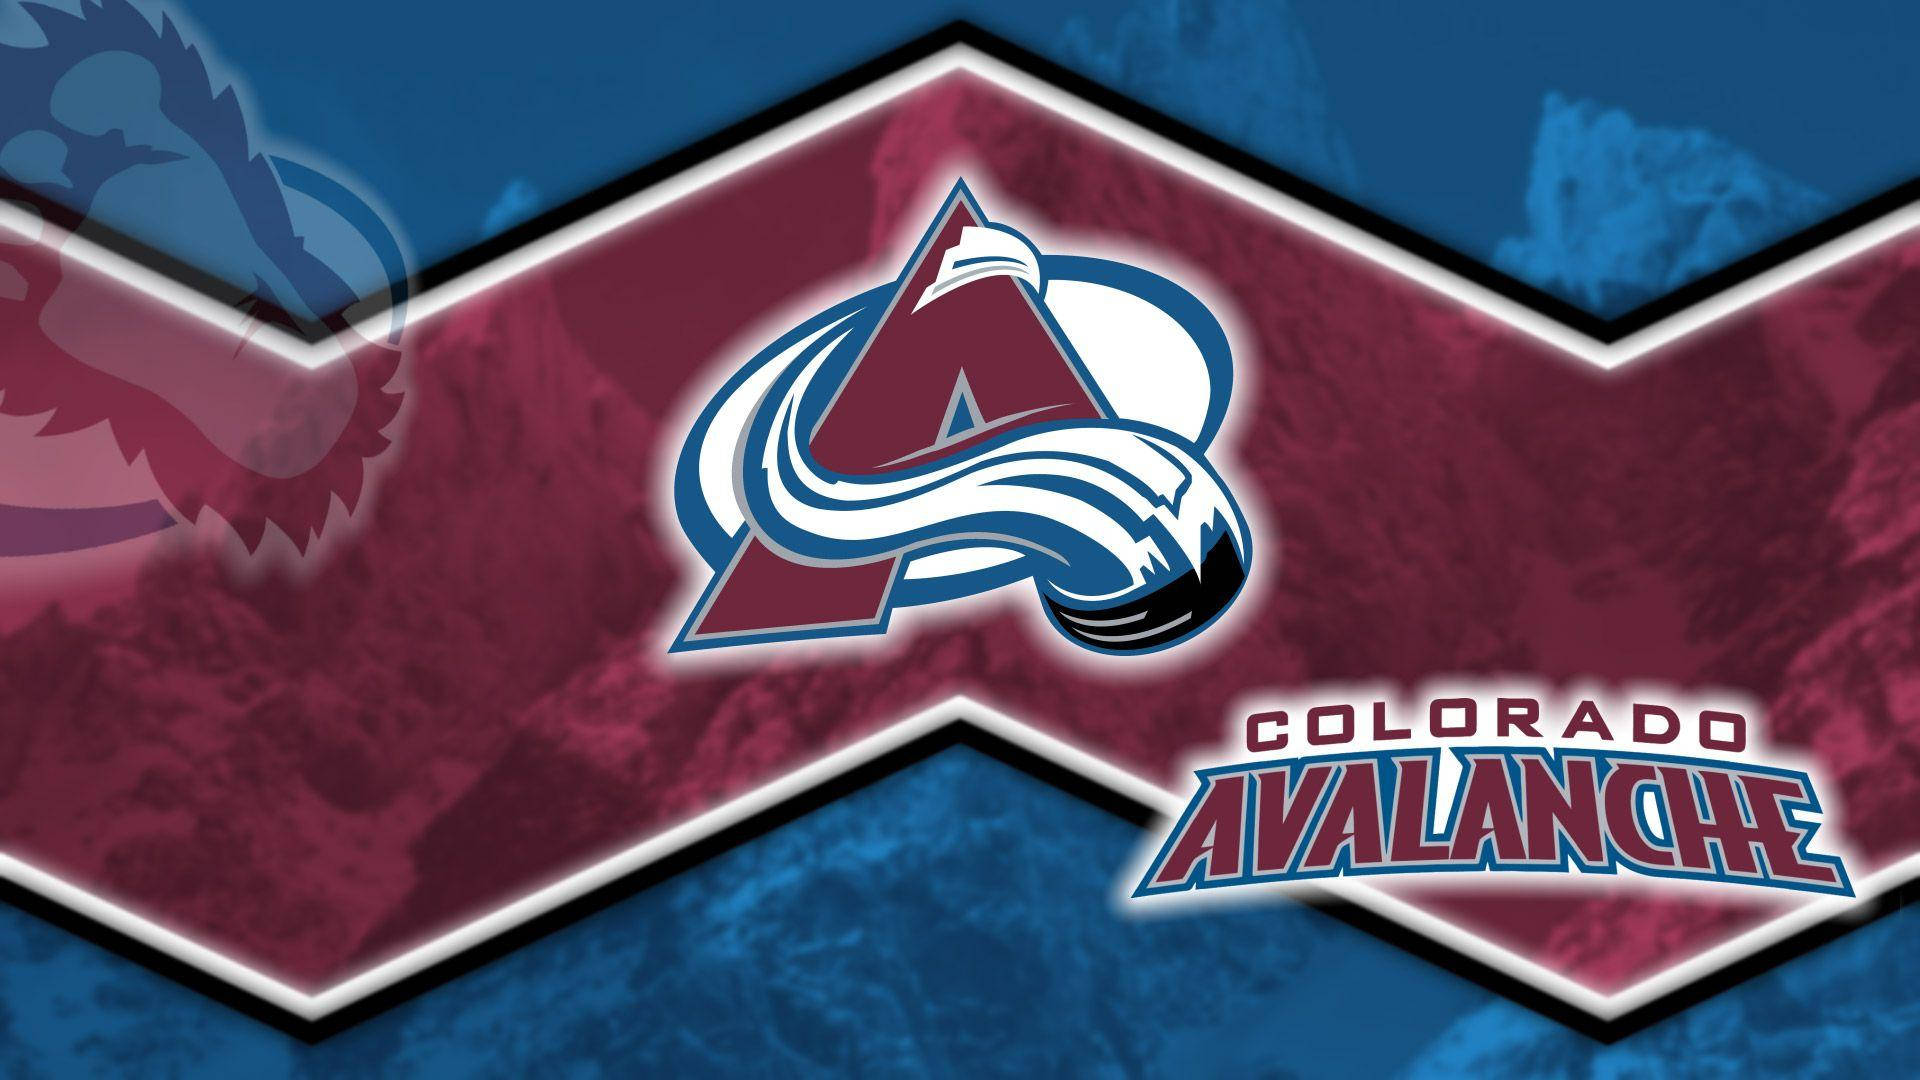 Colorado Avalanche Team Logo Background